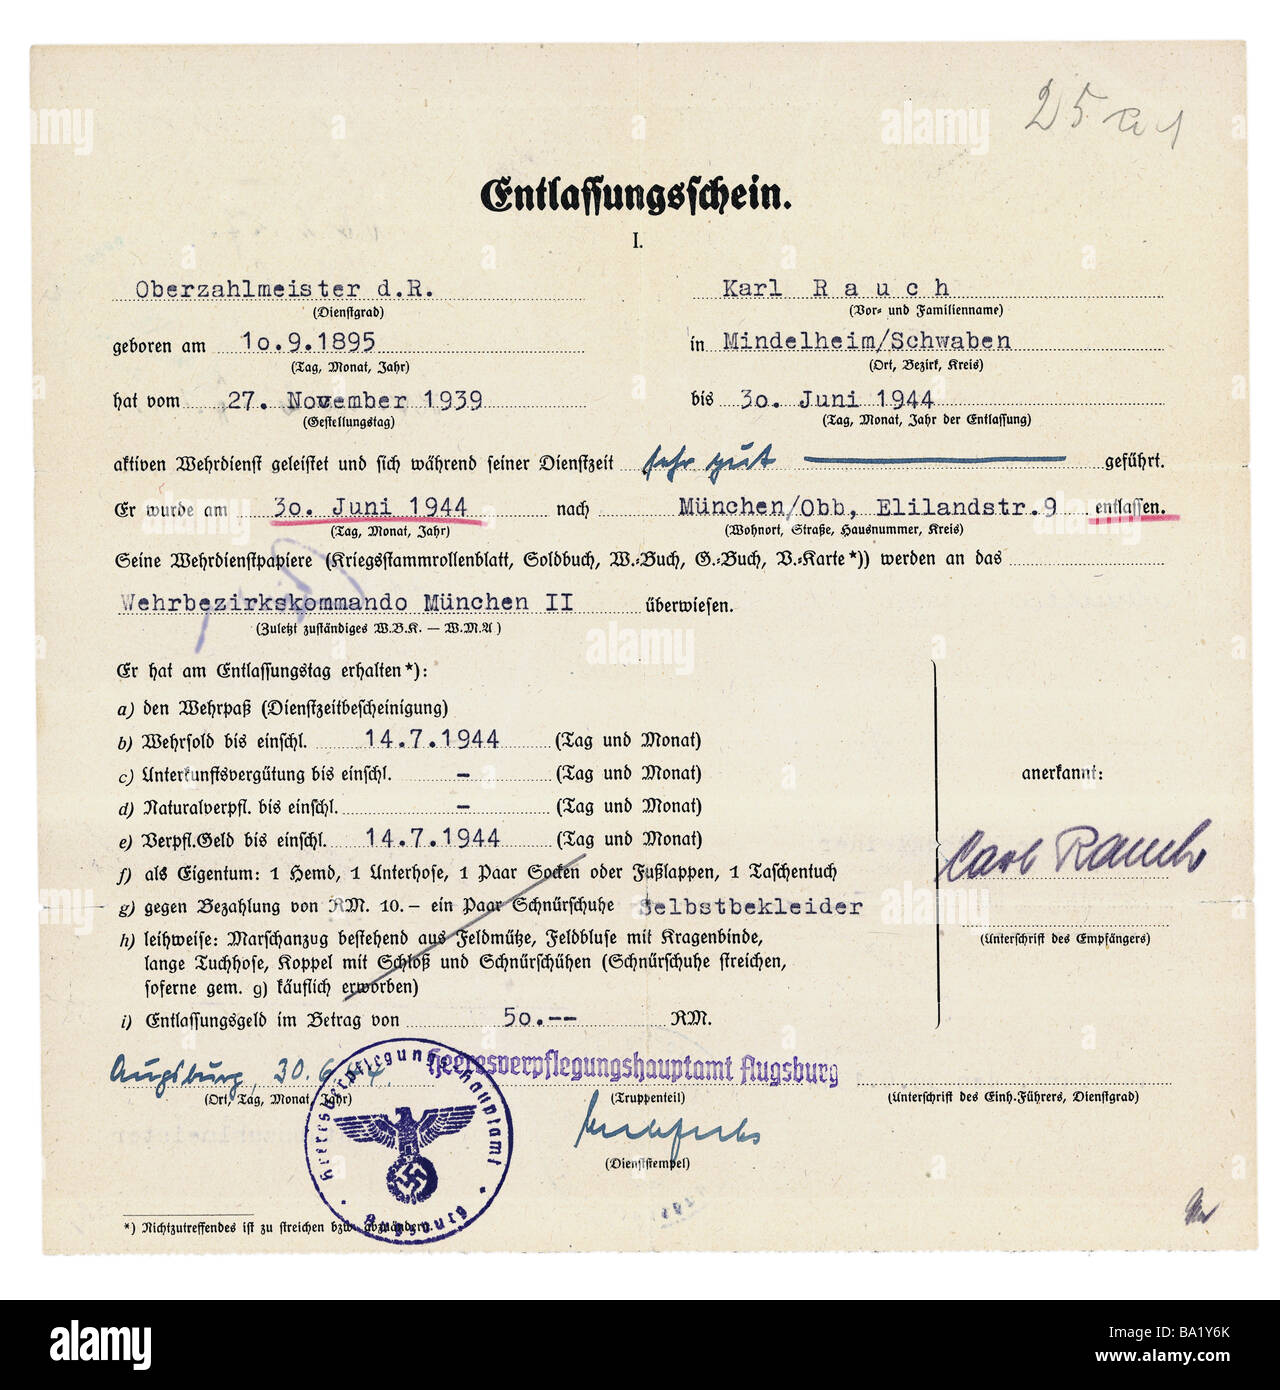 Nacionalsocialismo / nazismo, militar, ejército, certificado de descarga para Karl Rauch, Munich, Heeresverpflegungsamt (Oficina De Provisiones) Augsburg, 30.6.1944, Foto de stock